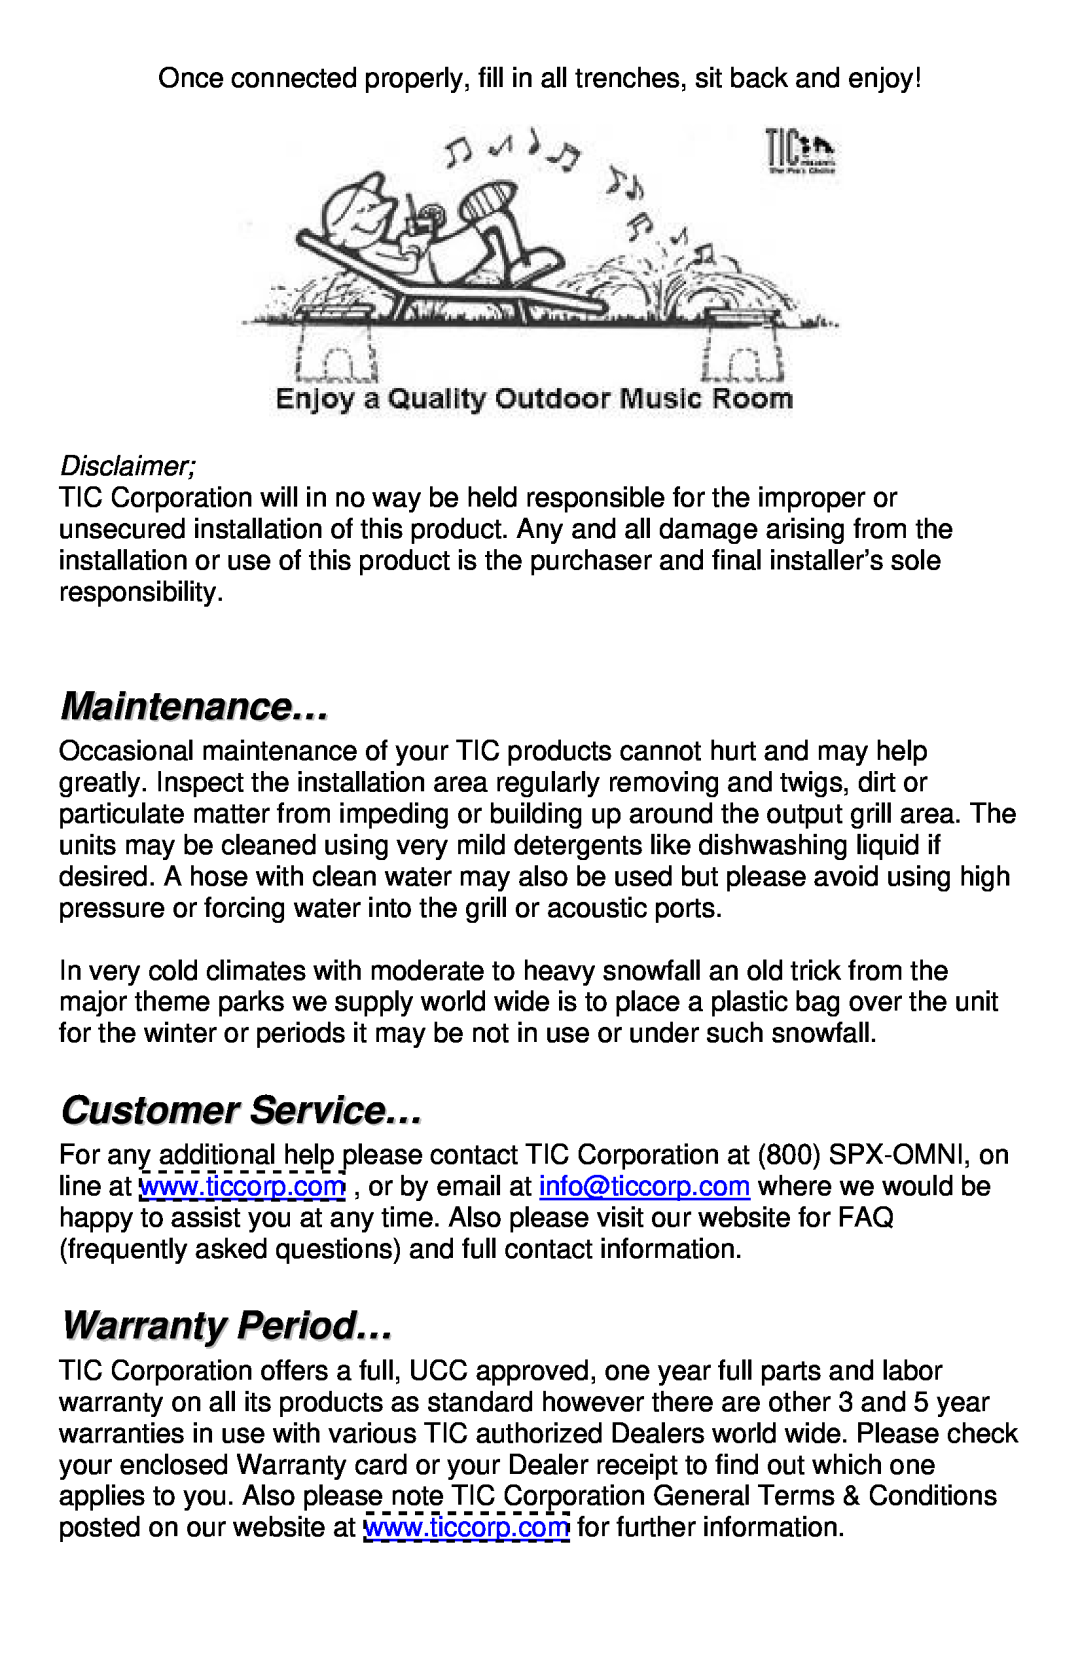 TIC GS50, TFS50 manual Maintenance…, Customer Service…, Warranty Period…, Disclaimer 